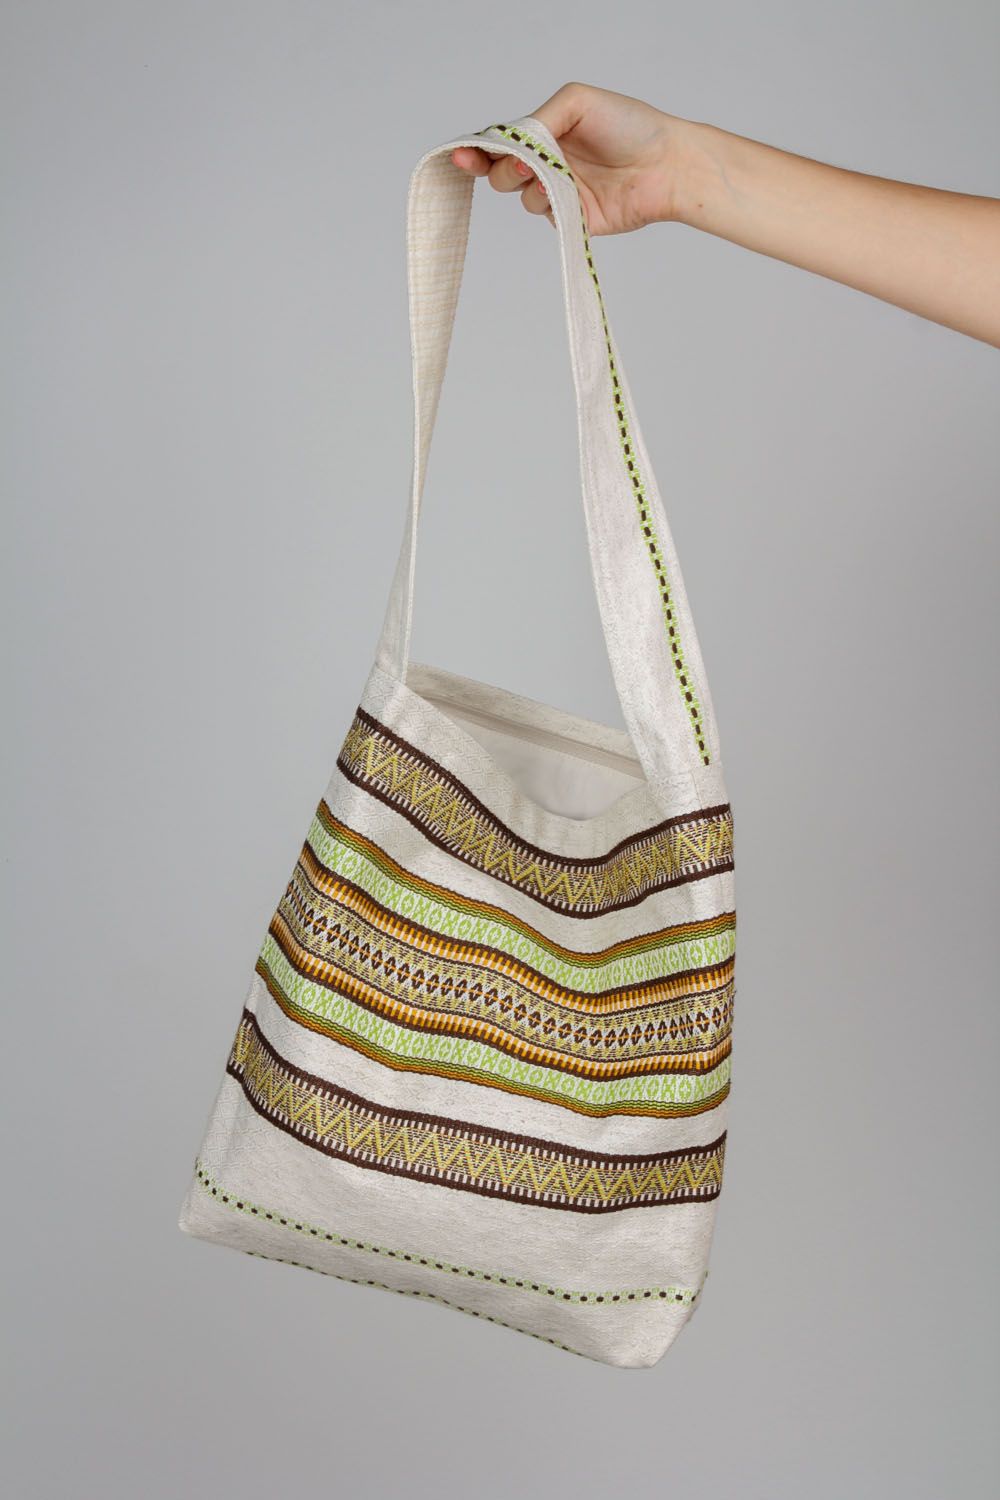 Ethnic style bag photo 2